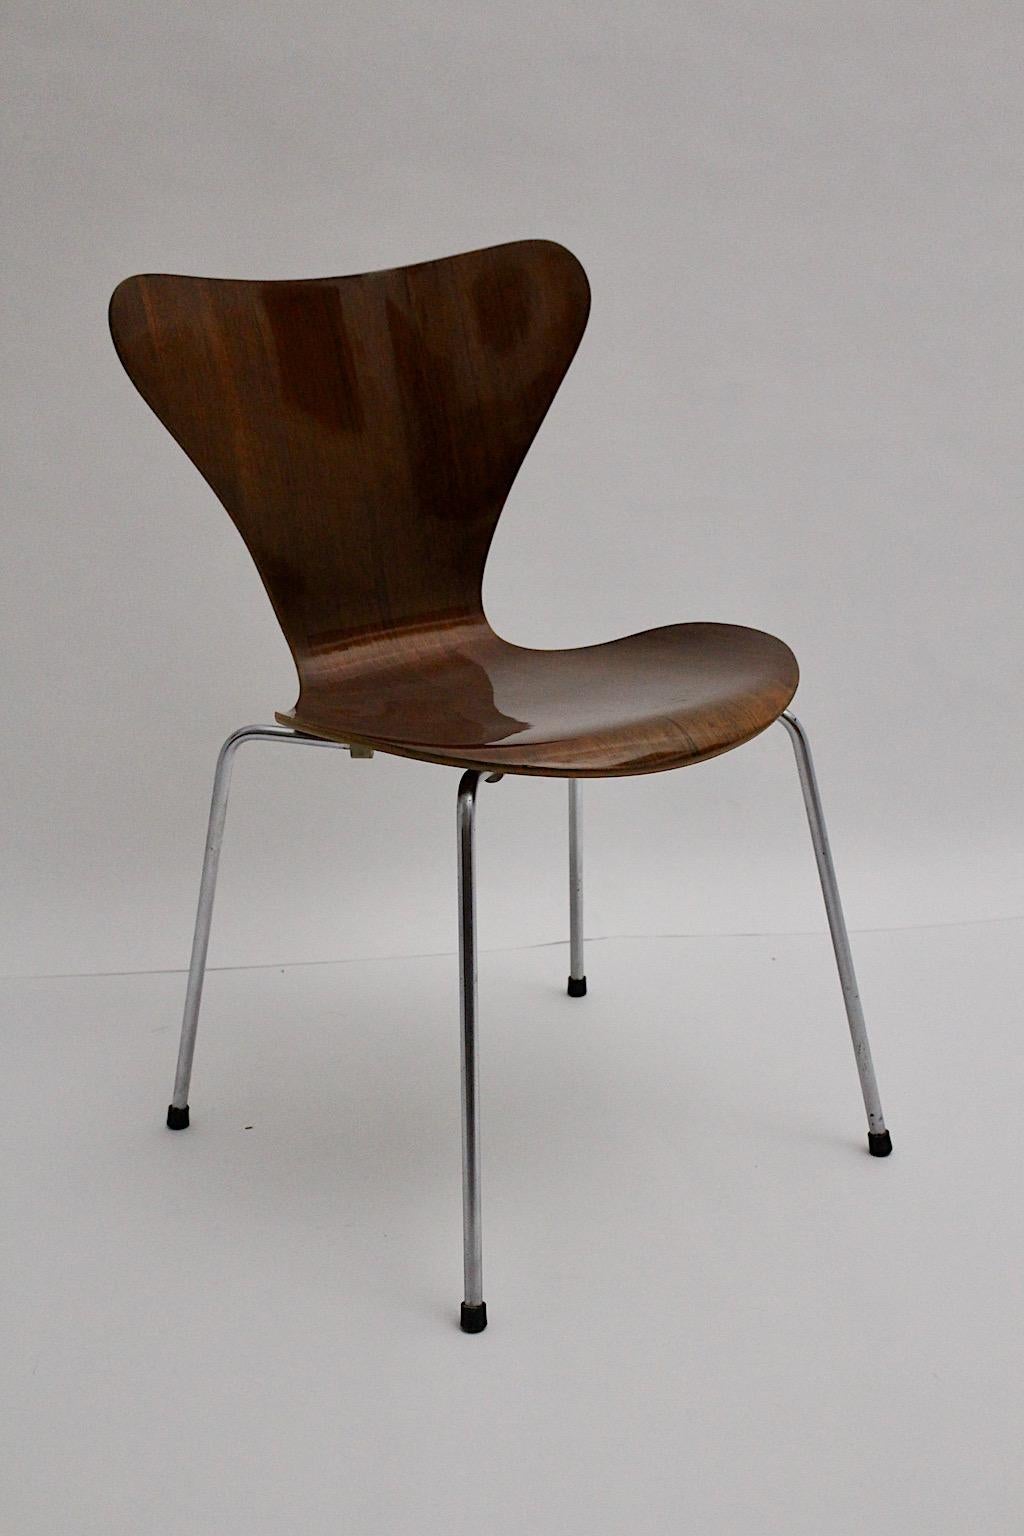 Modernist Vintage Brown Four Dining Chairs Arne Jacobsen 3107 circa 1955 Denmark For Sale 7